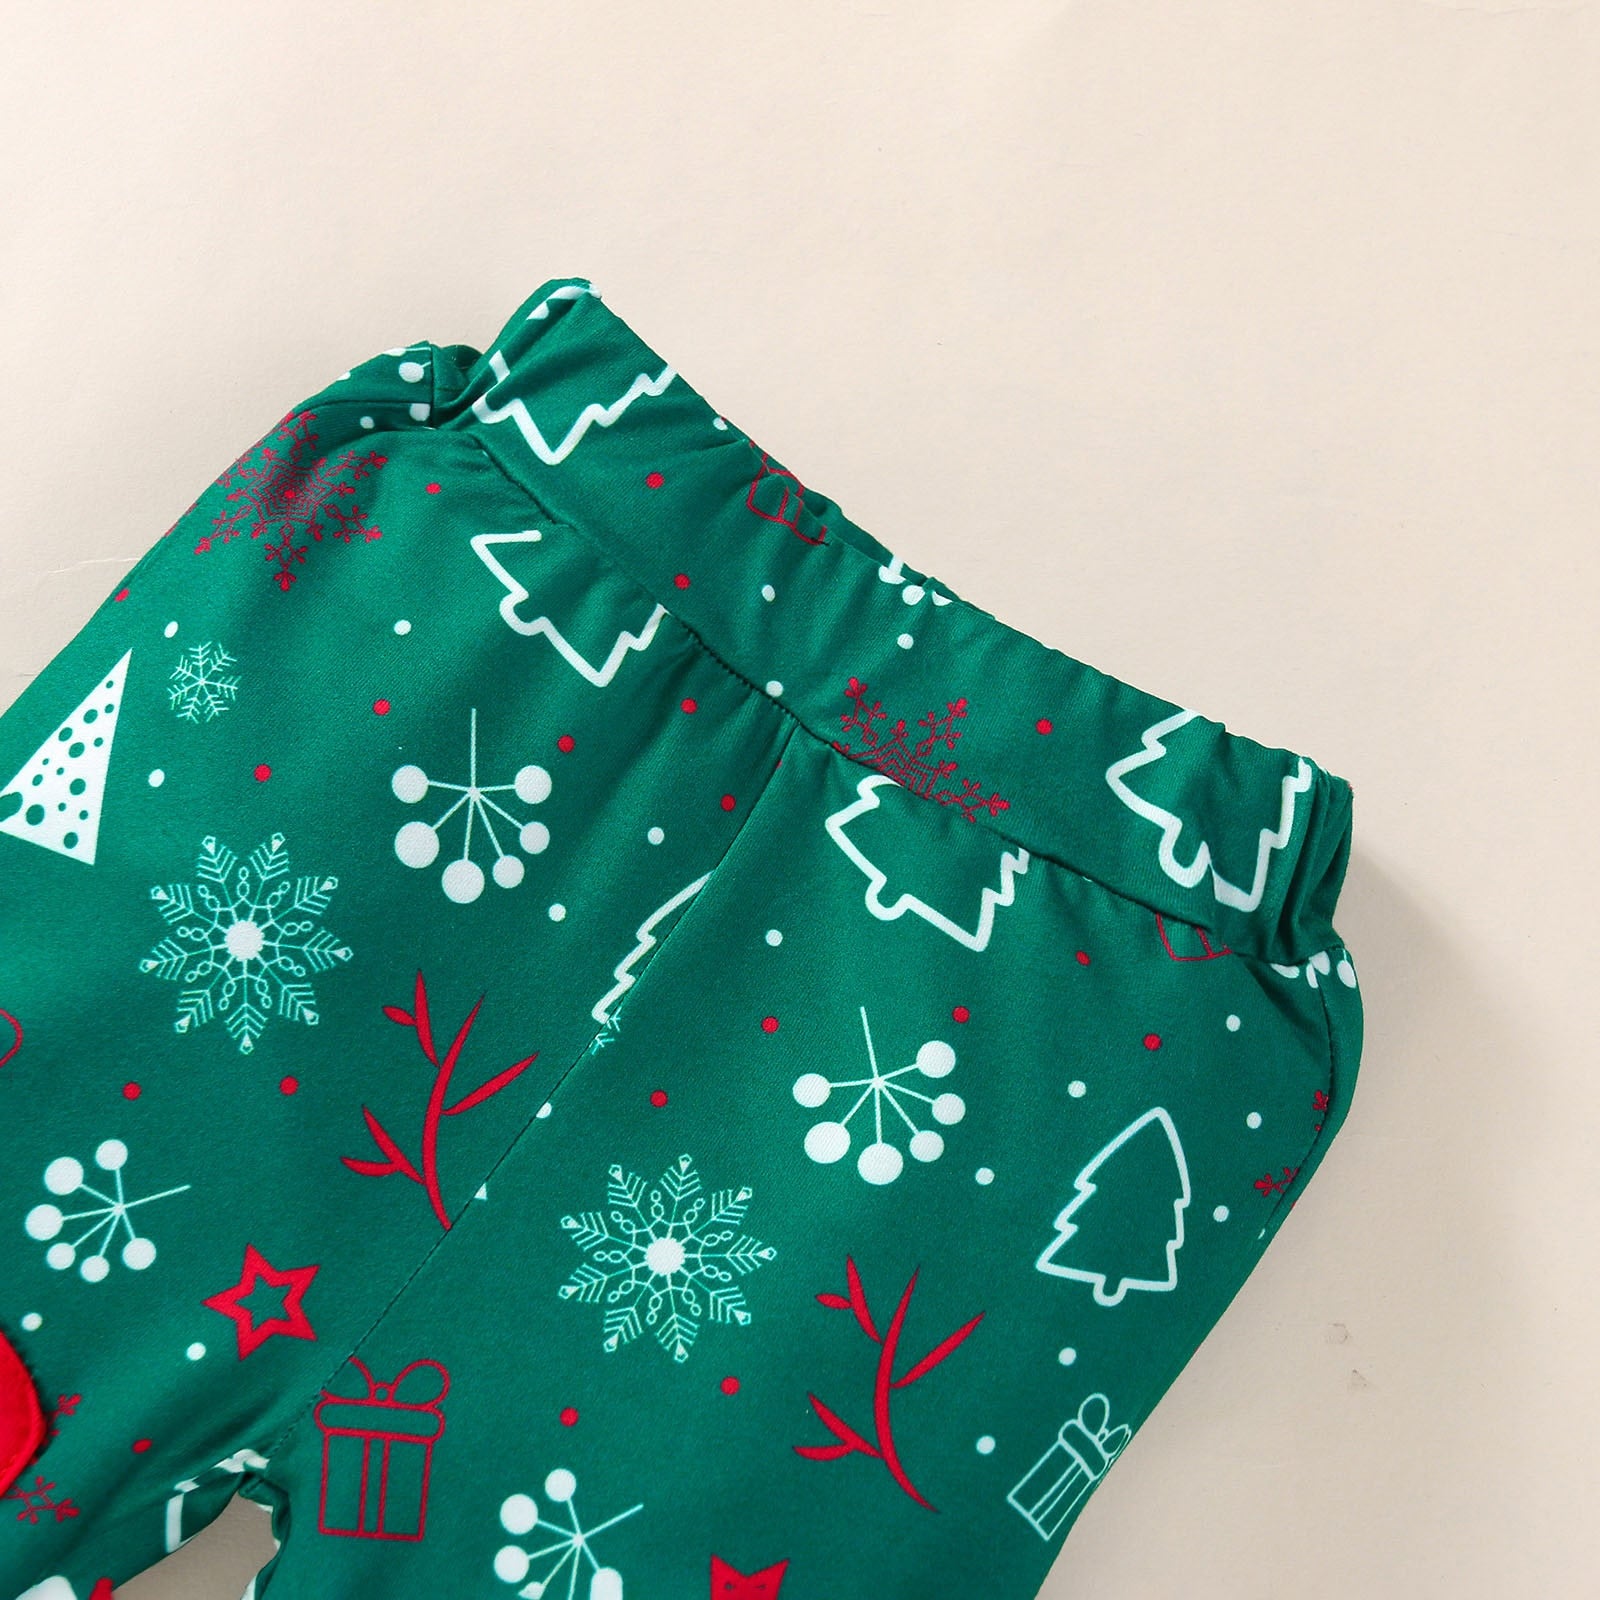 2PCS Infant unisex Christmas  Cartoon Striped Printed long sleeve Romper w Pants Trousers